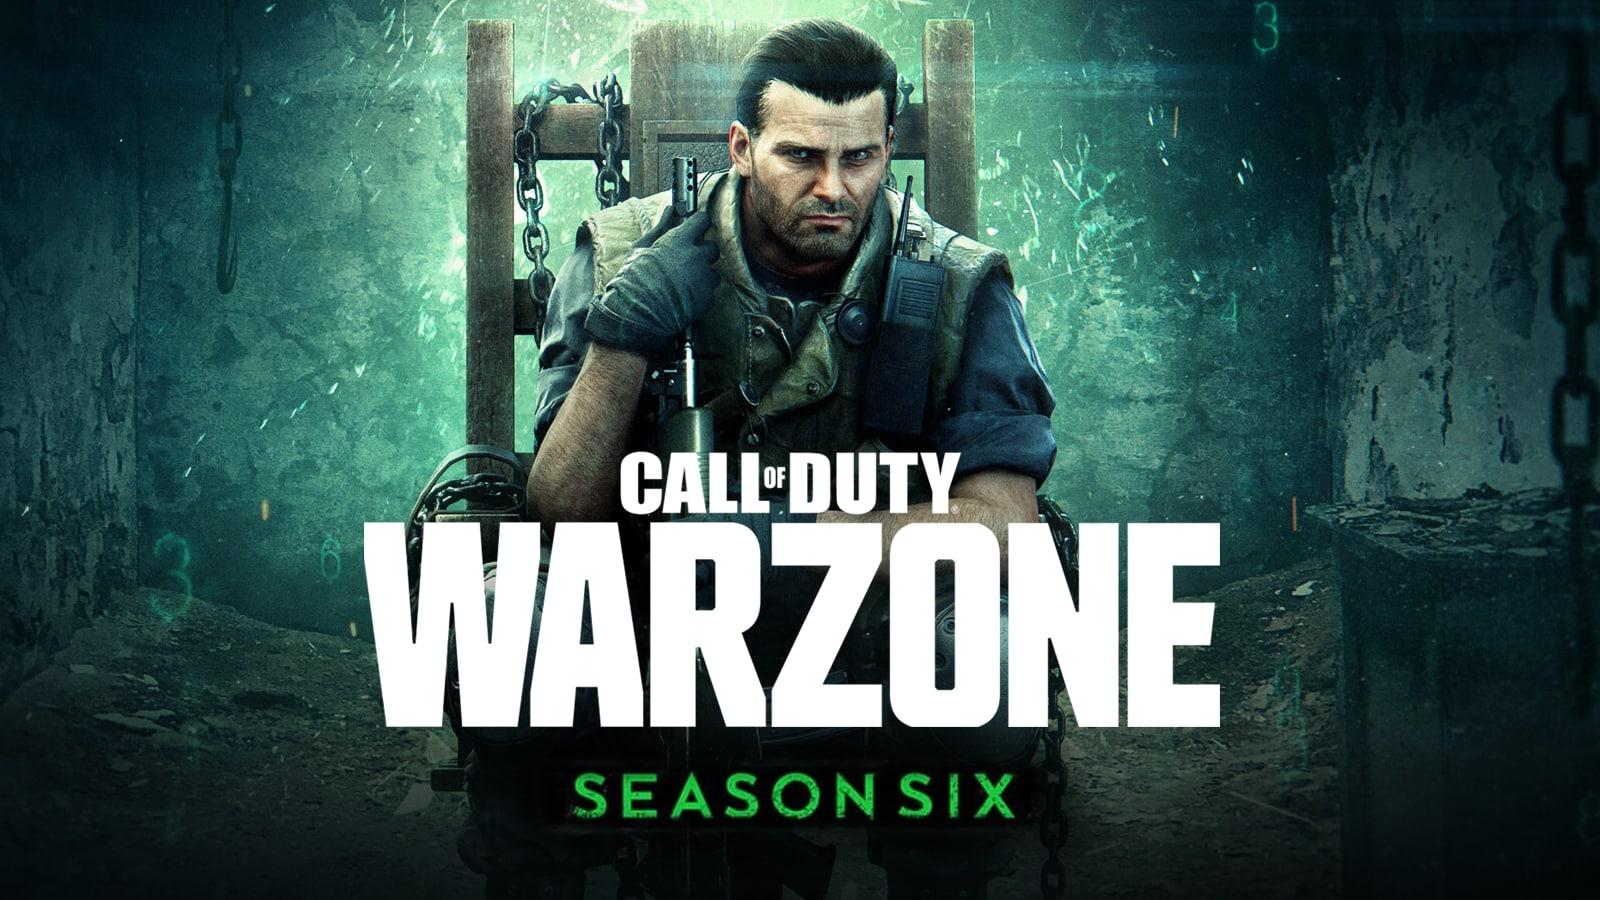 Warzone season 6 key art